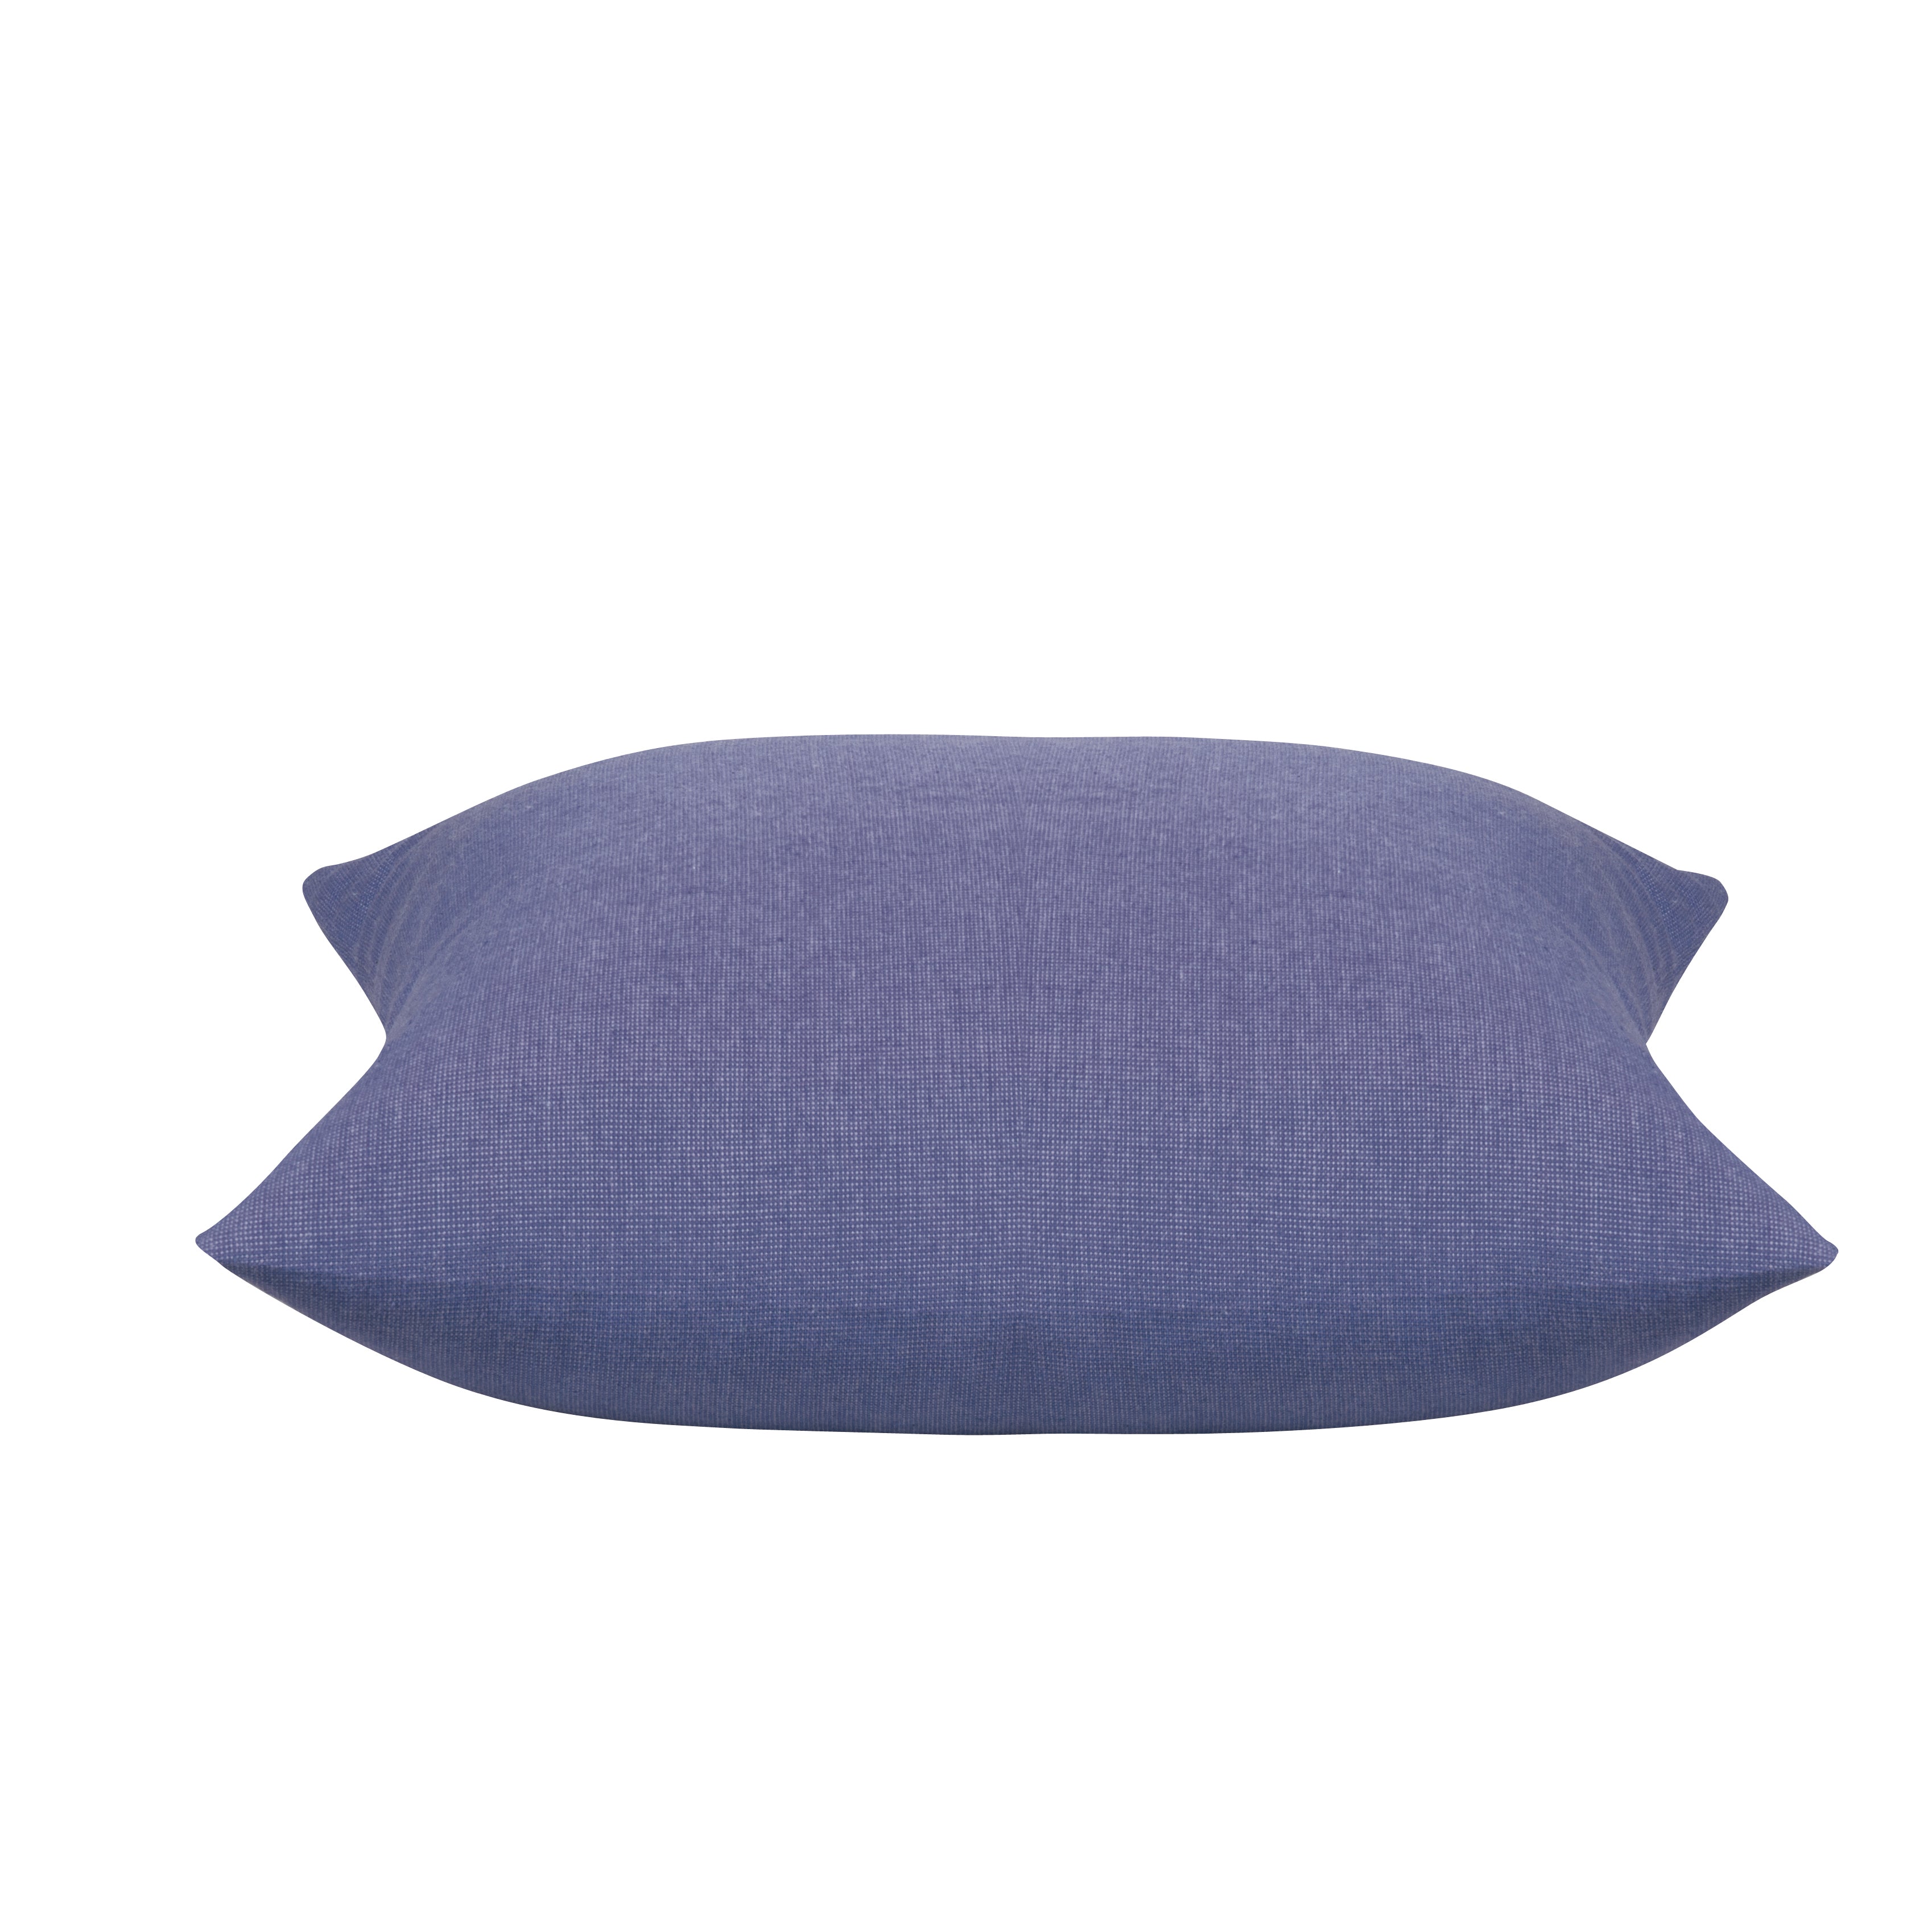 Elemts Indigo Blue Base Colour cushion cover